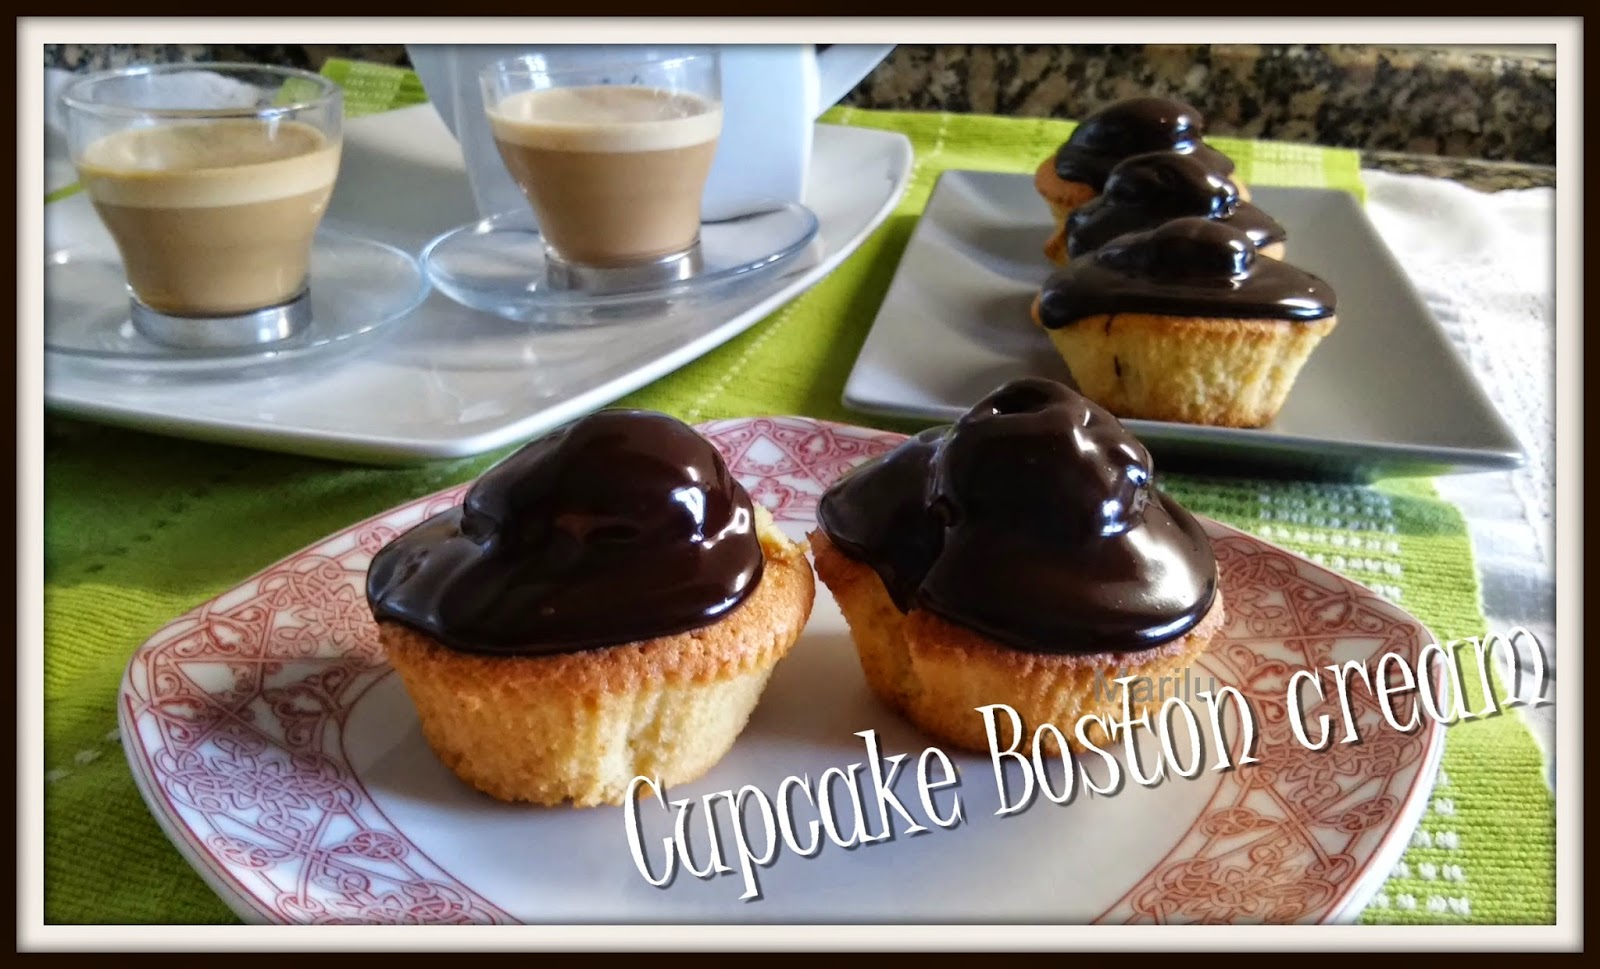 Cupcake Boston Cream
